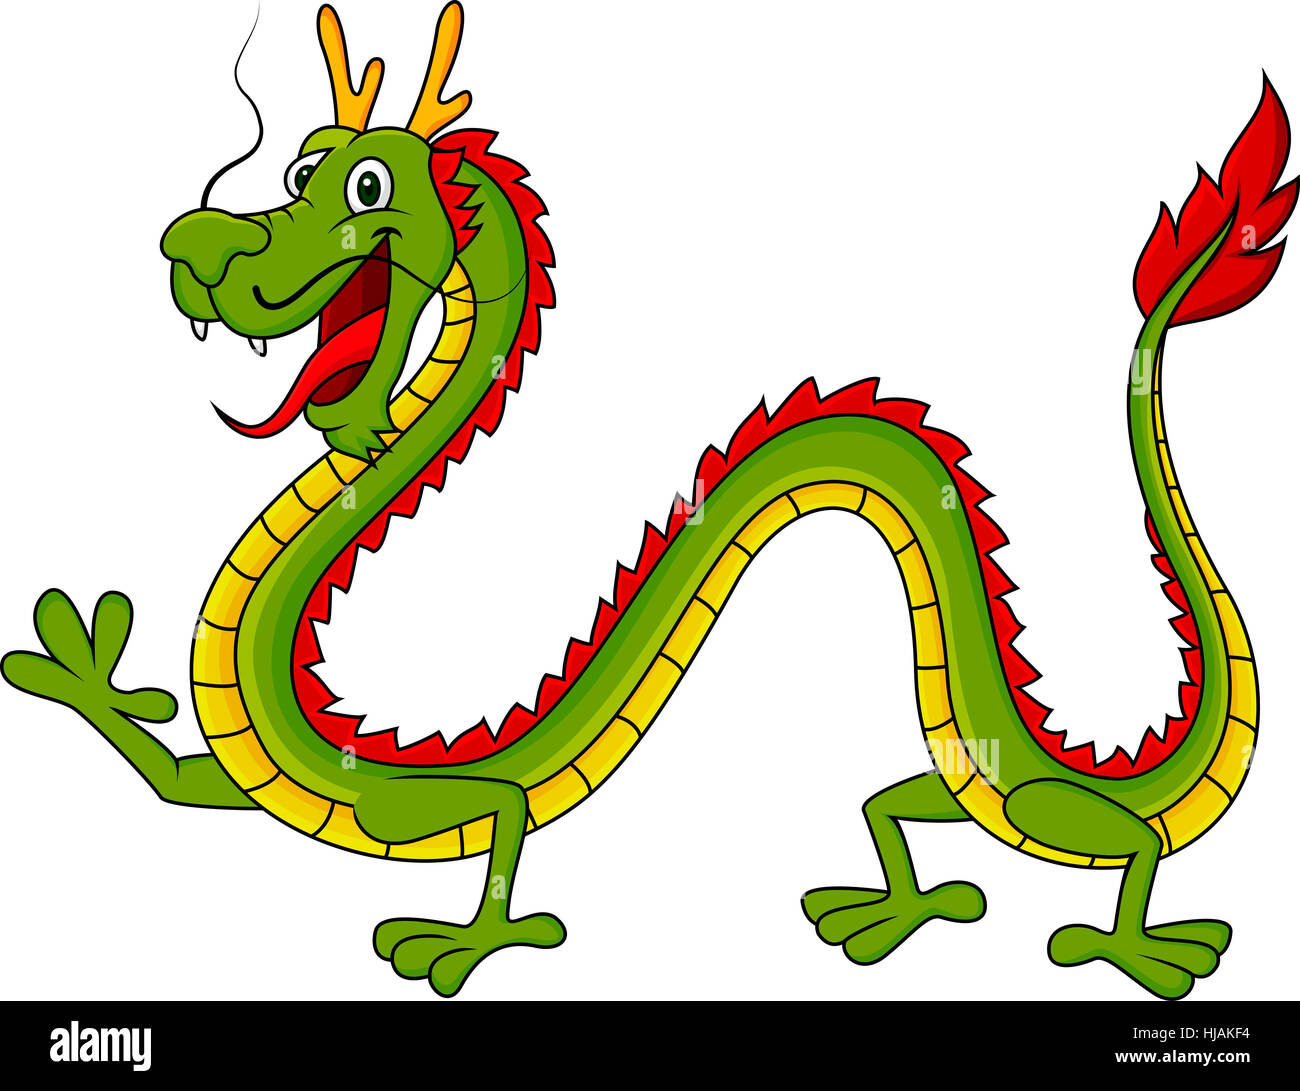 animal, fantasy, dragon, chinese, legend, cartoon, fly, flies, flys, flying, Stock Photo